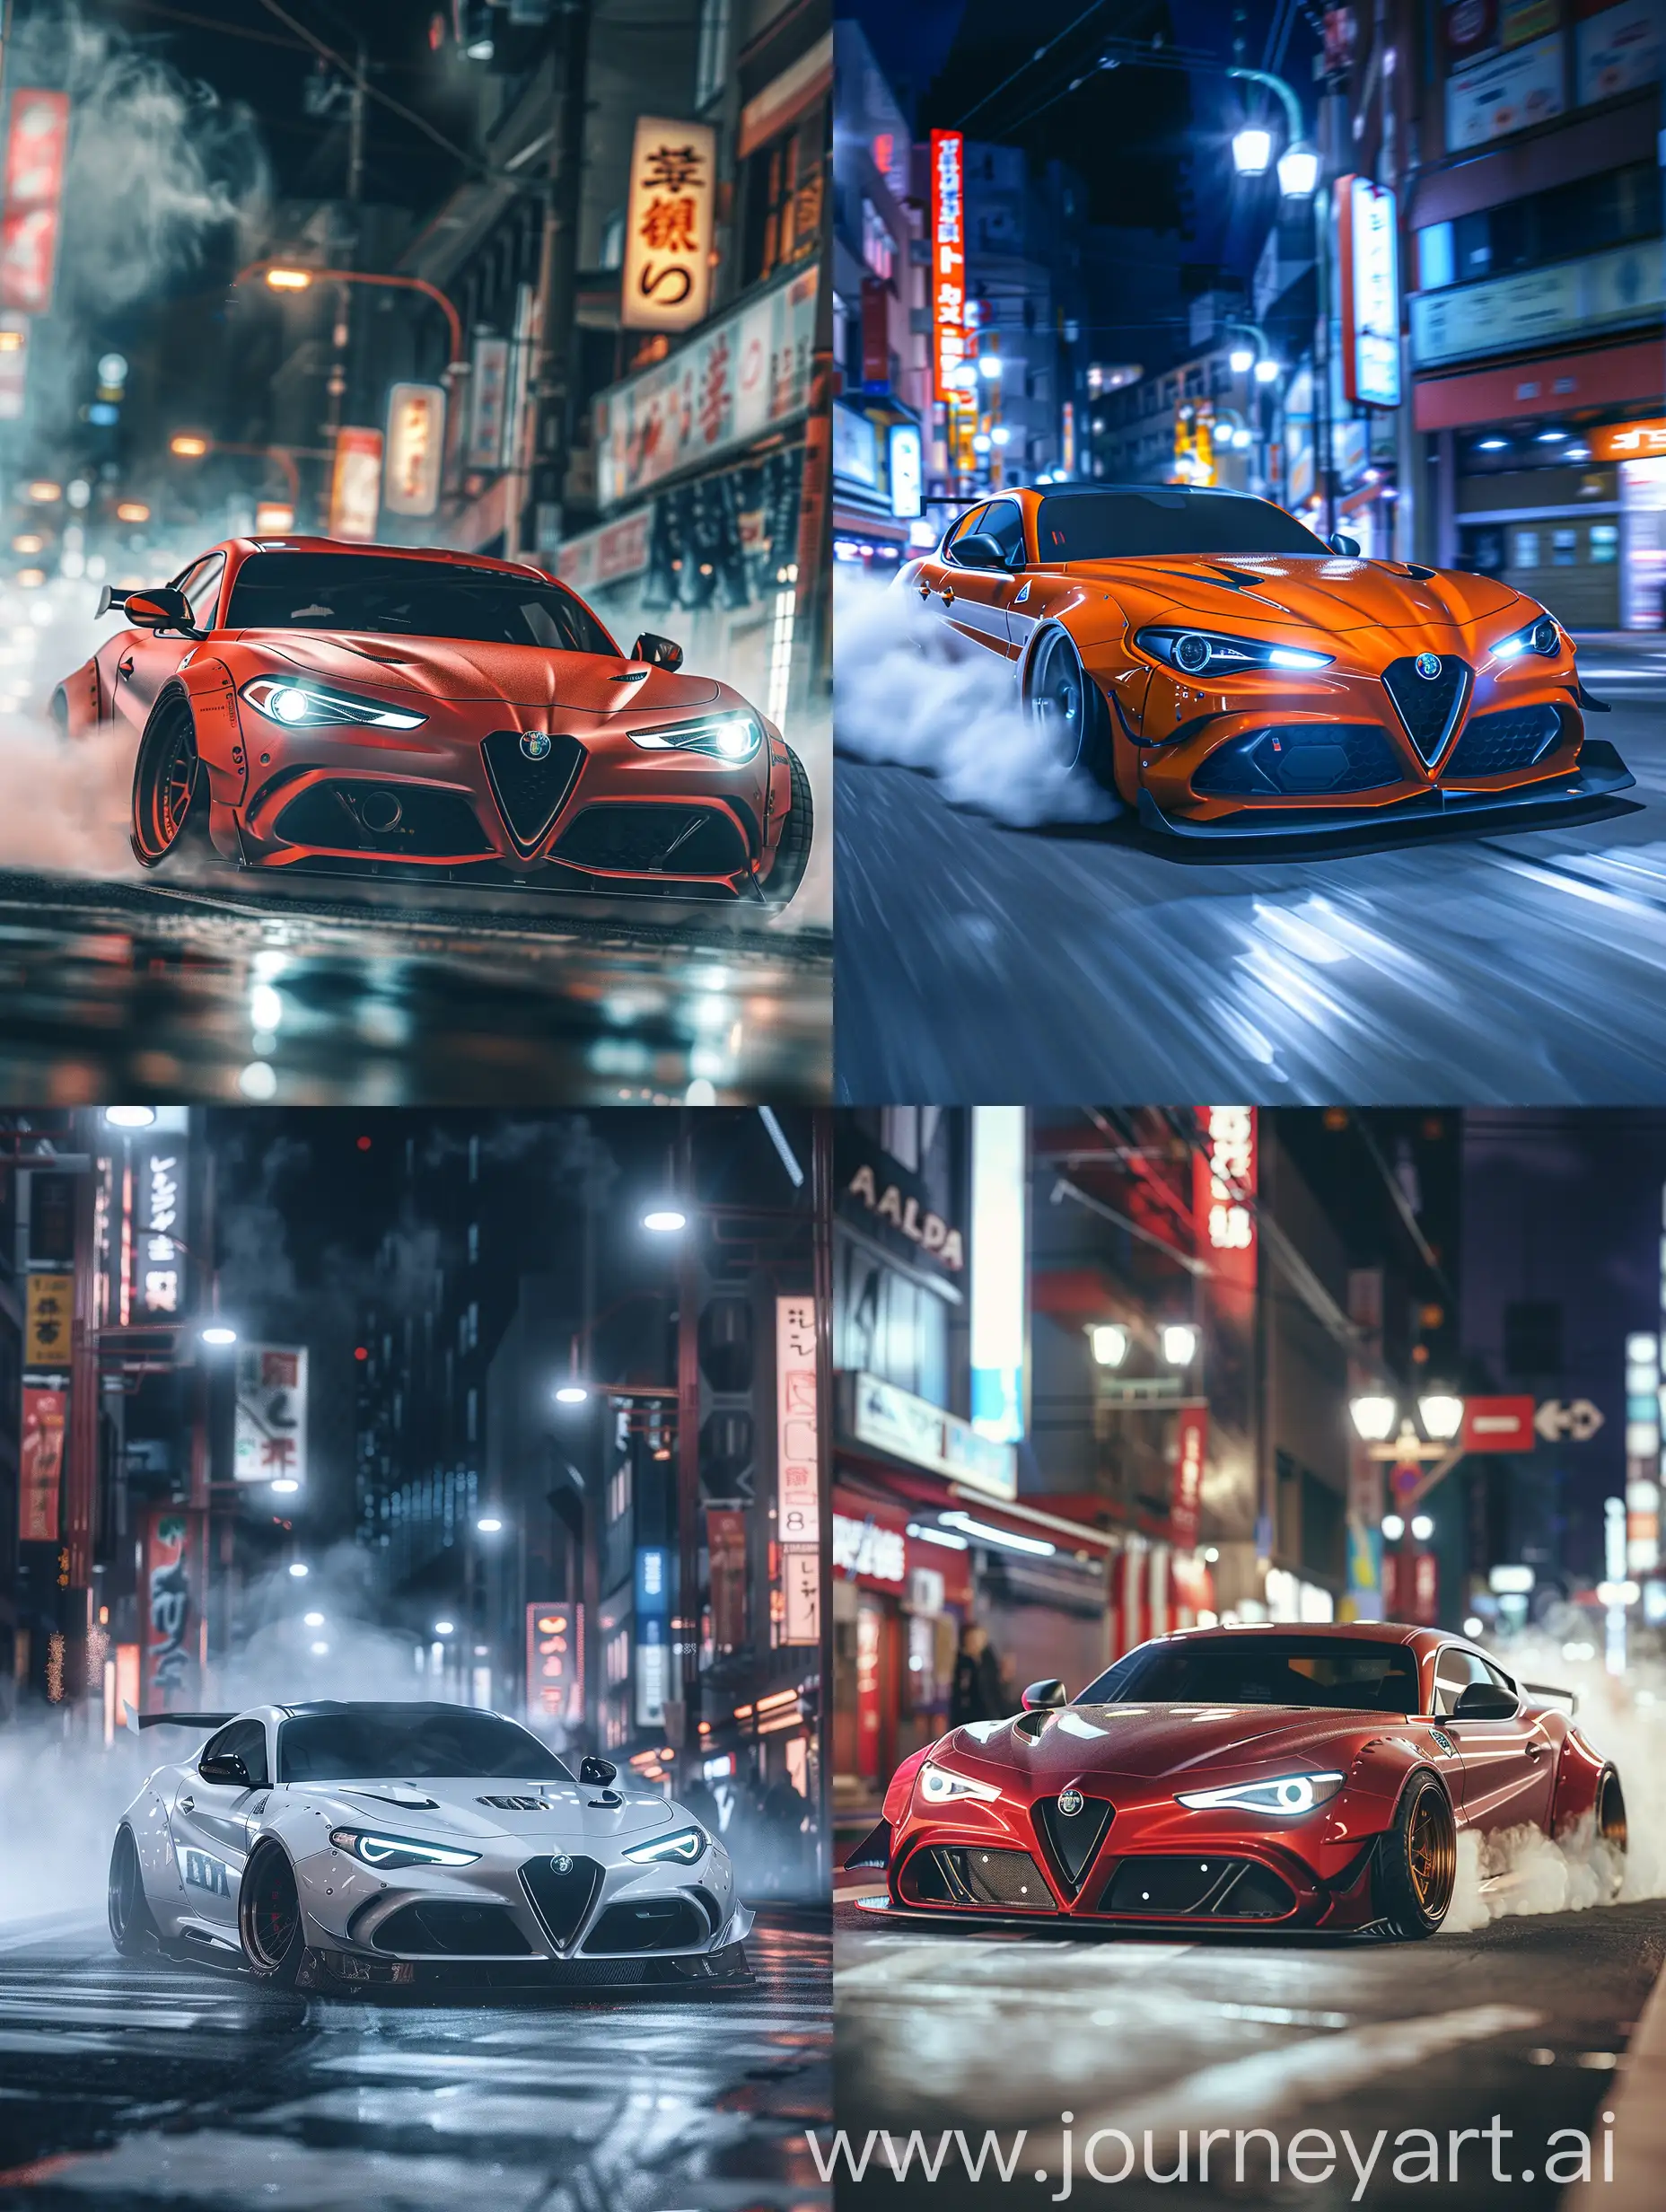 Dynamic-Alpha-Romeo-Drift-Photoshoot-on-Japans-Night-Street-in-High-Resolution